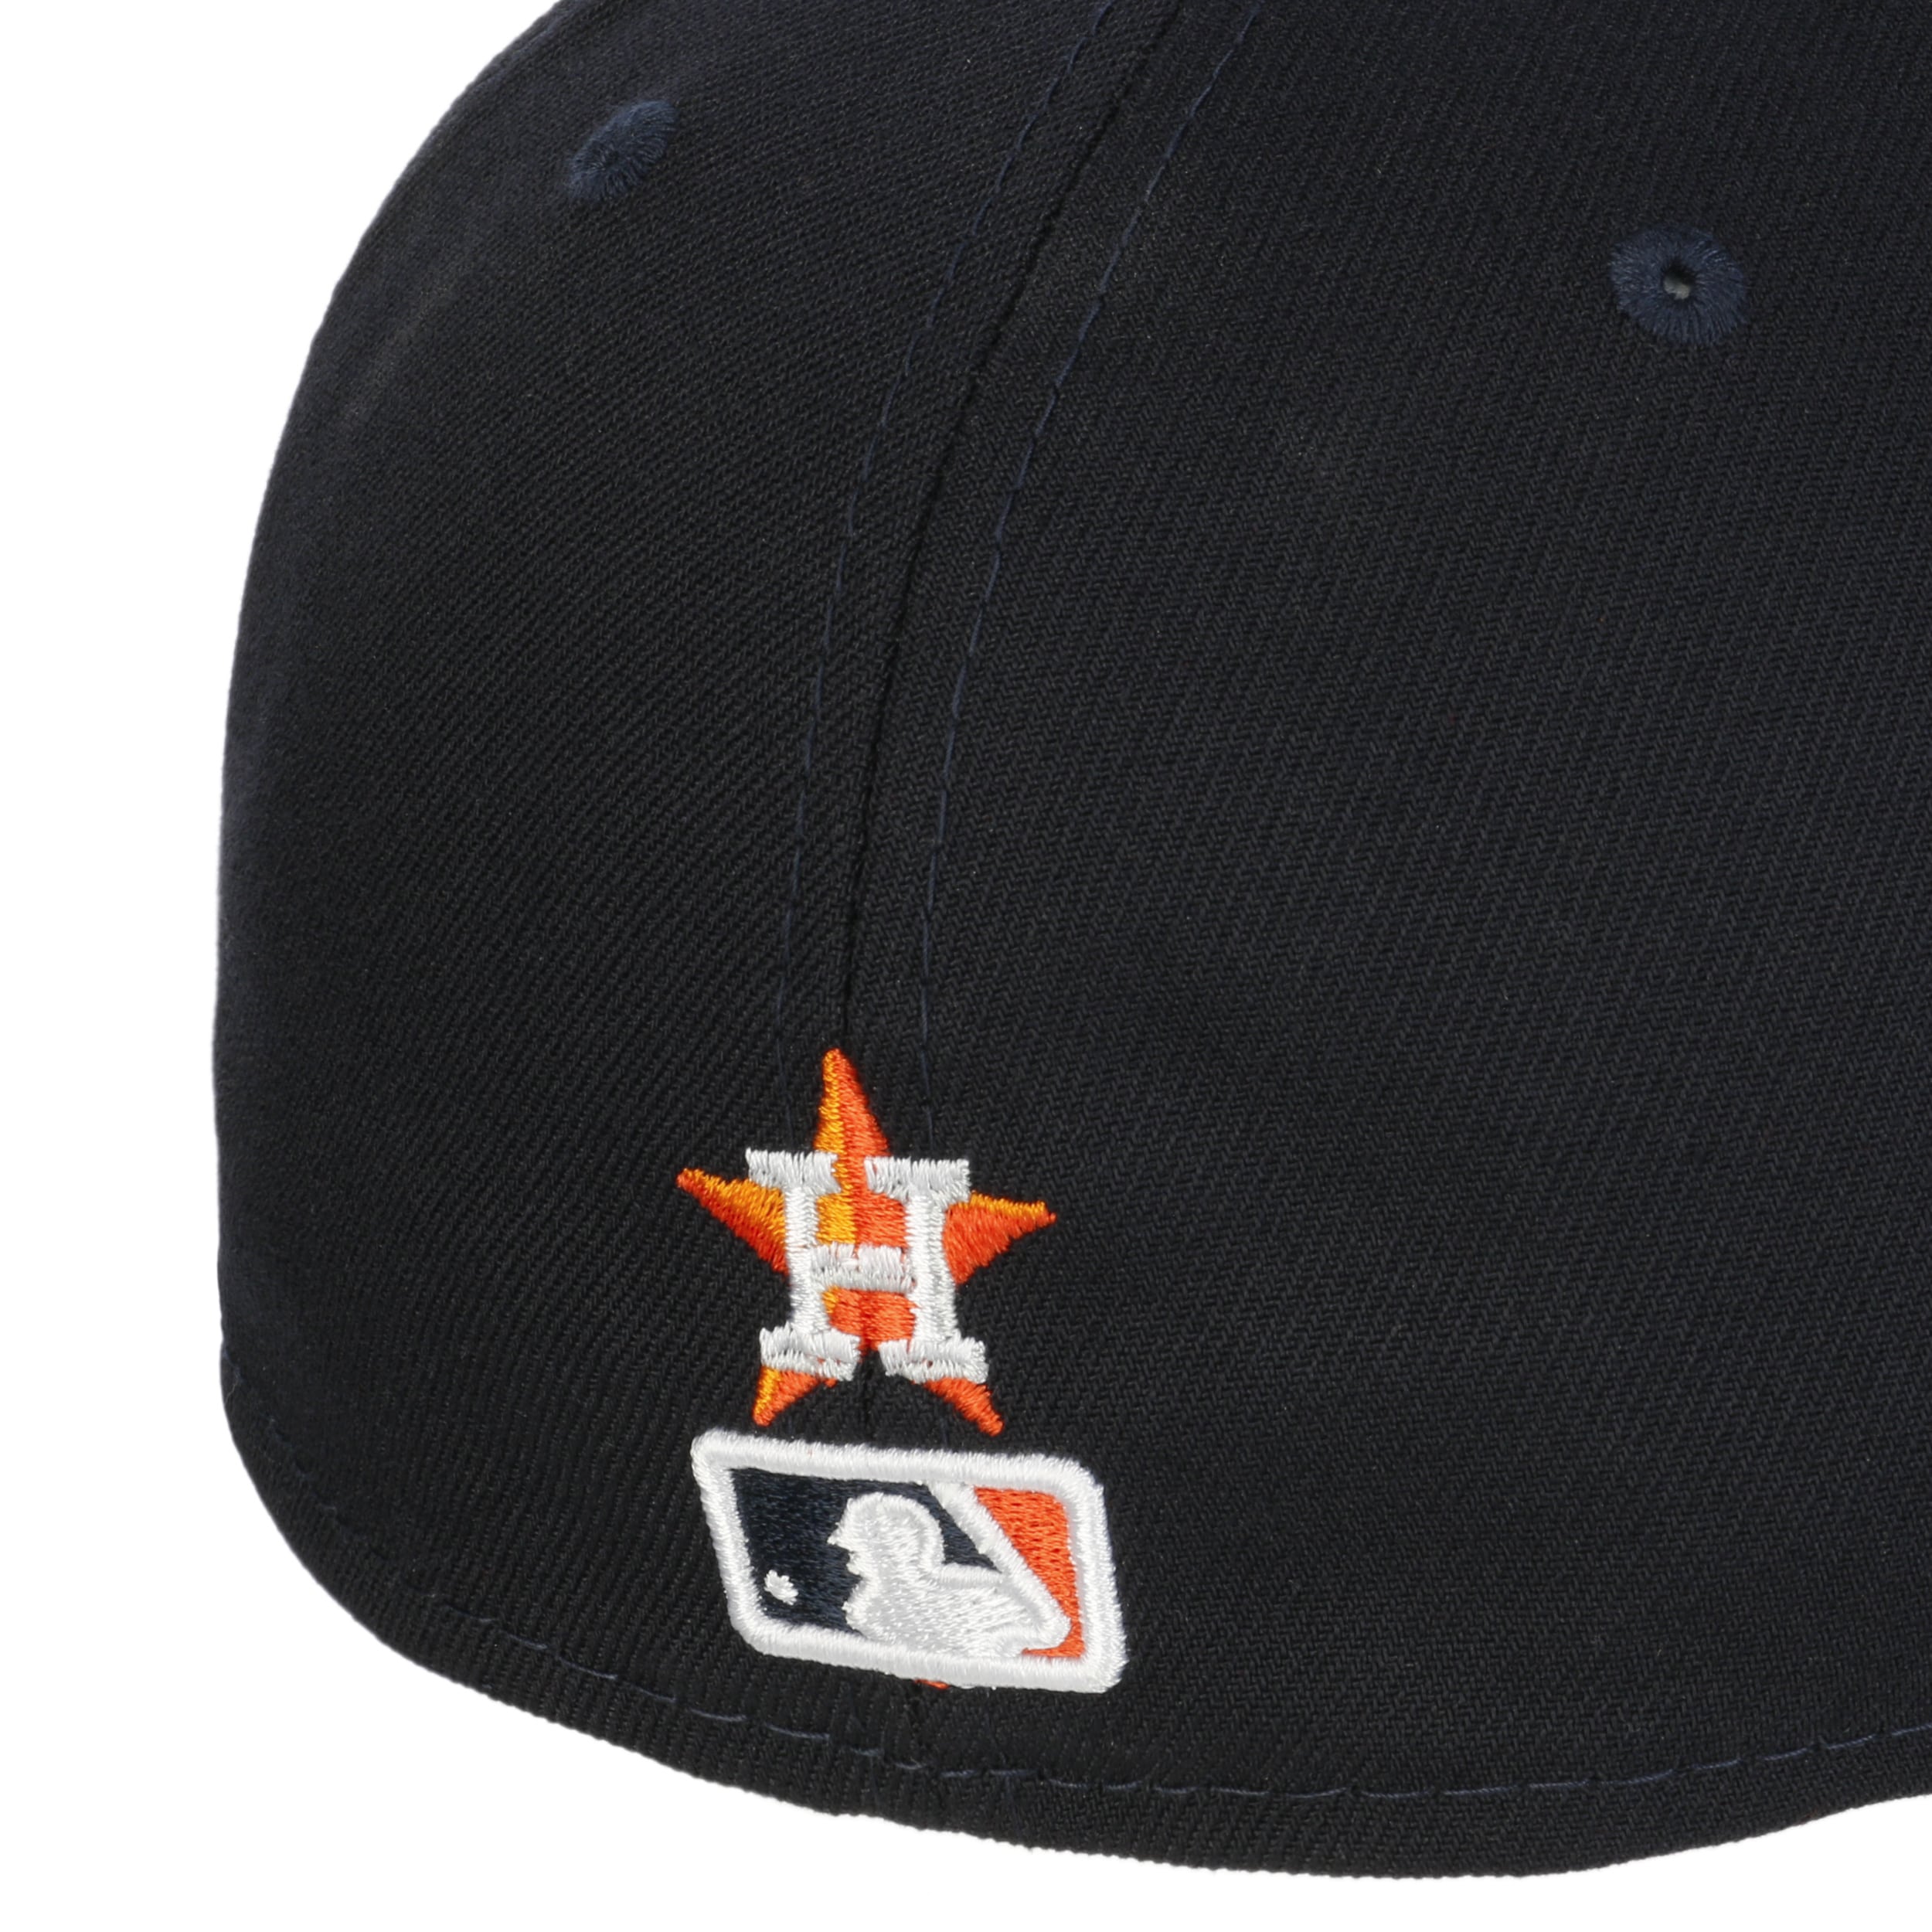 New Era 59Fifty Houston Astros Fitted Hat 7 5/8, Orange, Black MLB